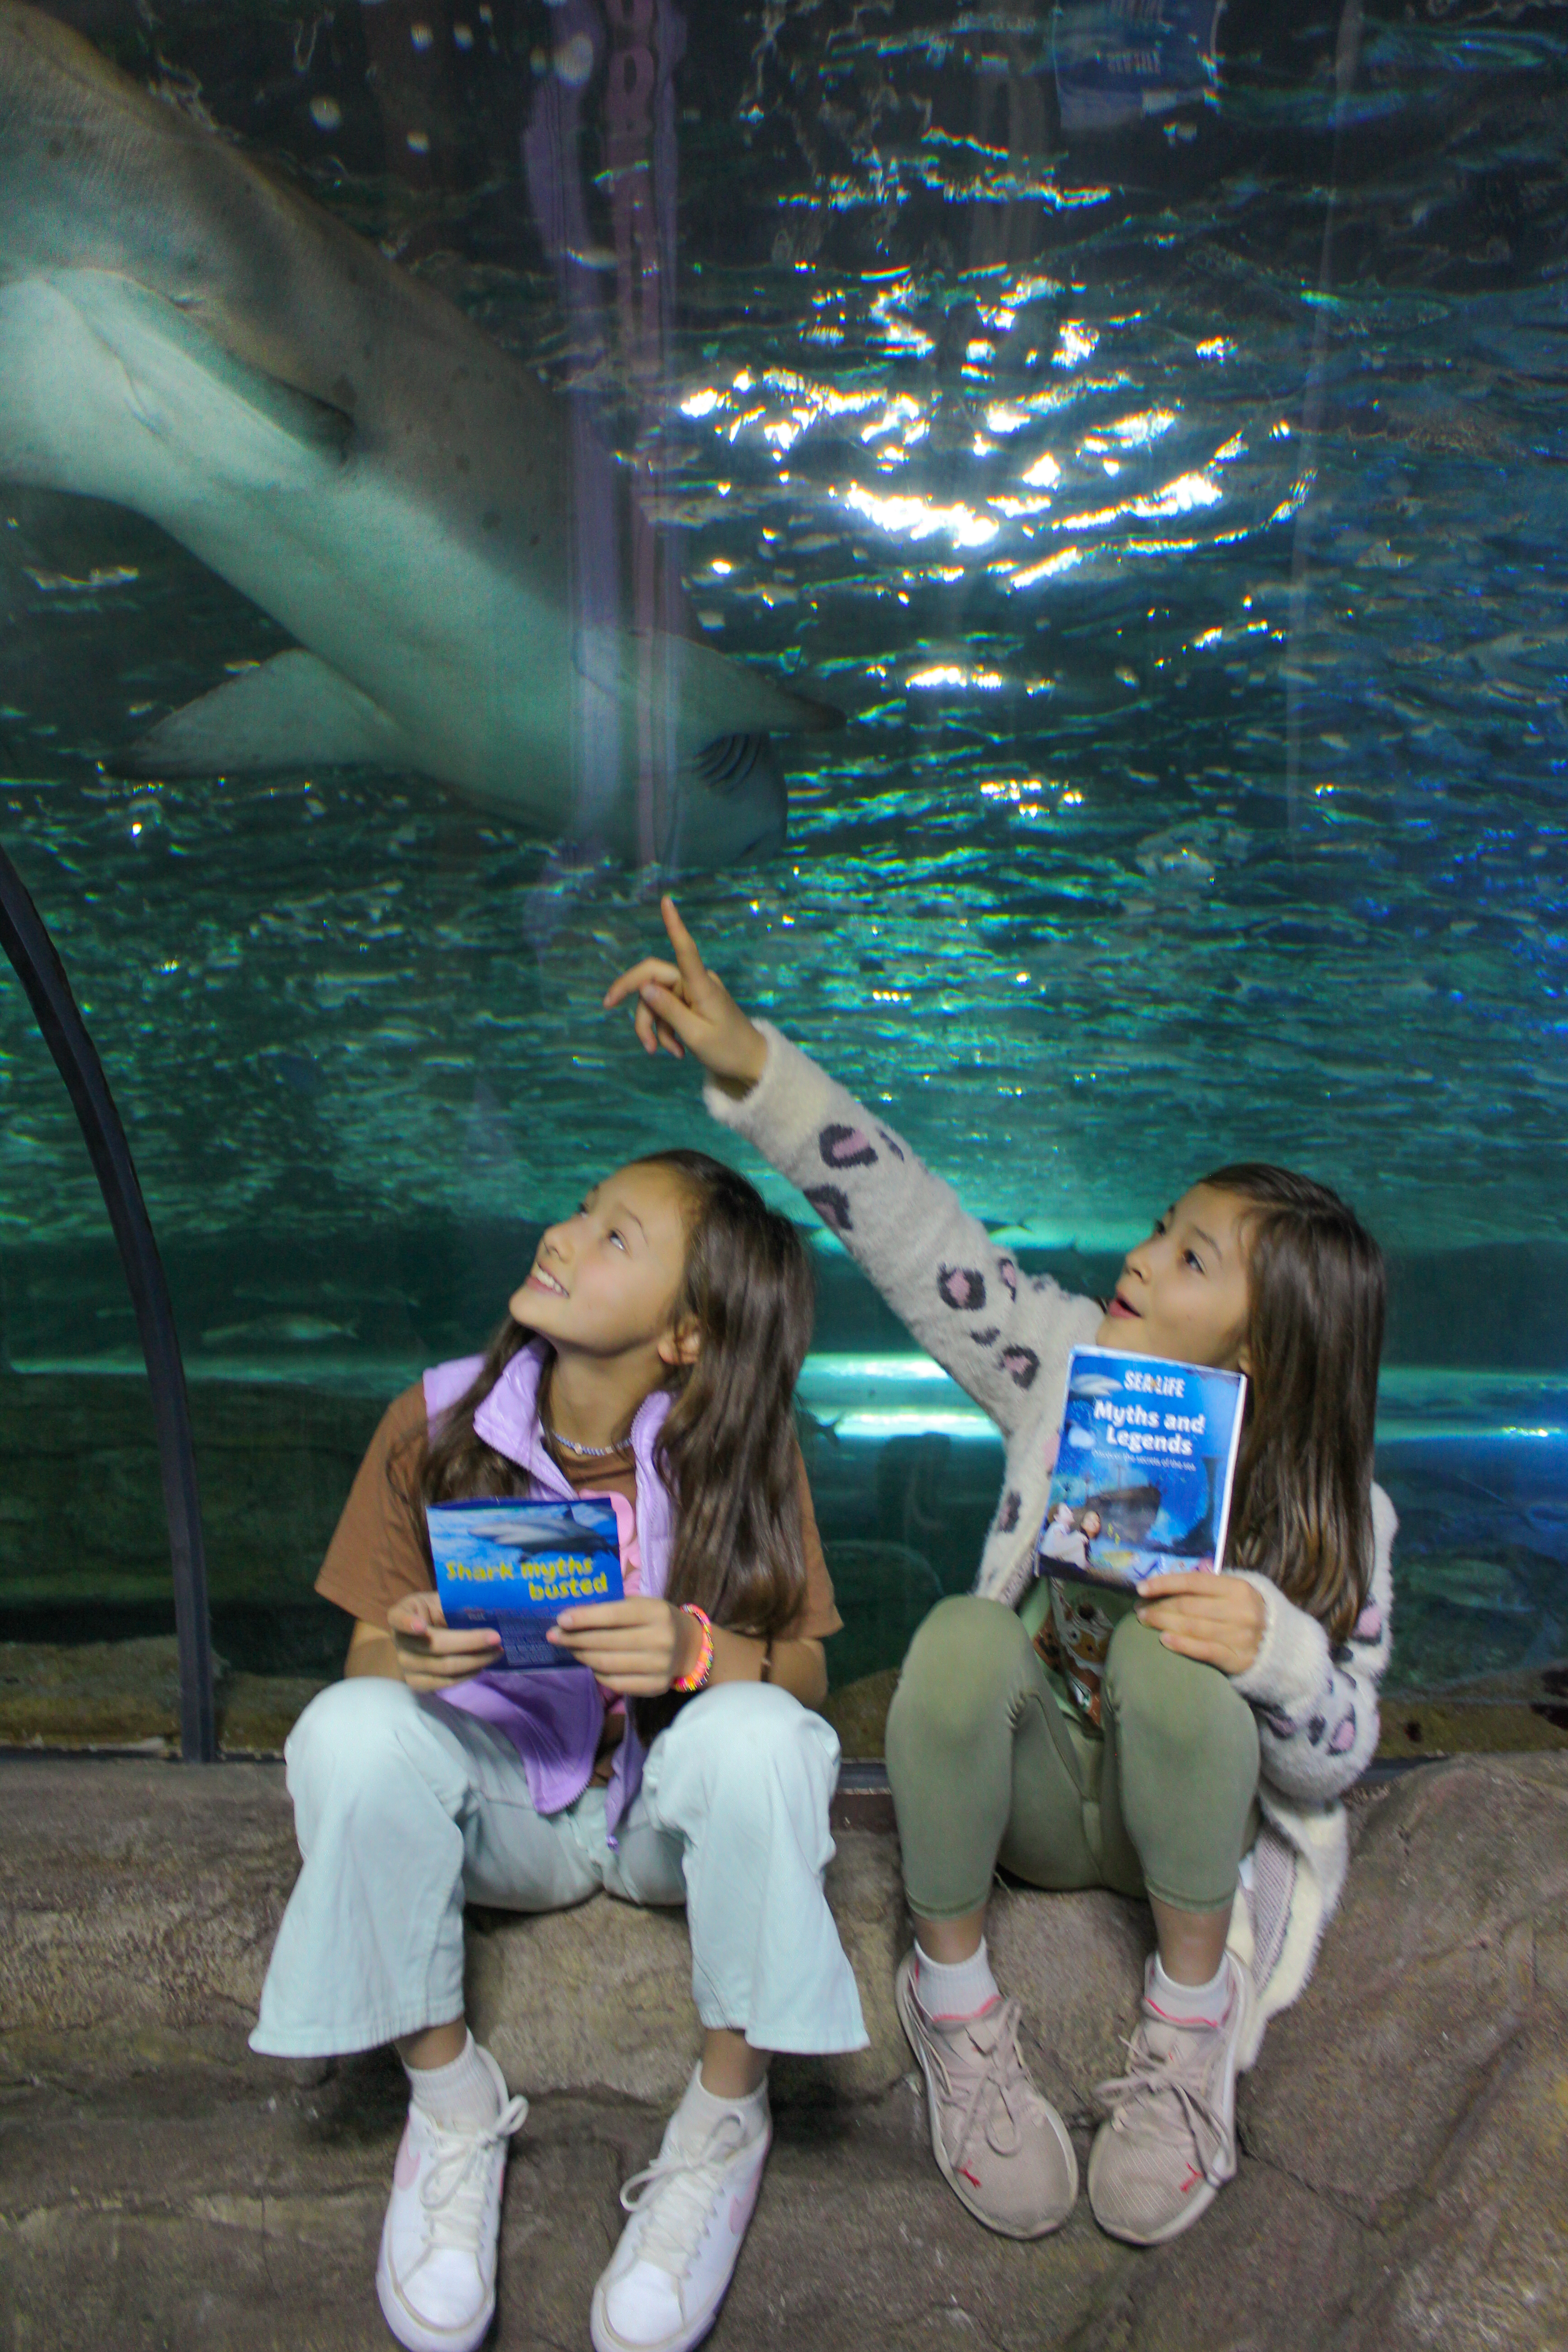 SEA LIFE Sydney Aquarium Myths And Legends Shark Valley Tunnel